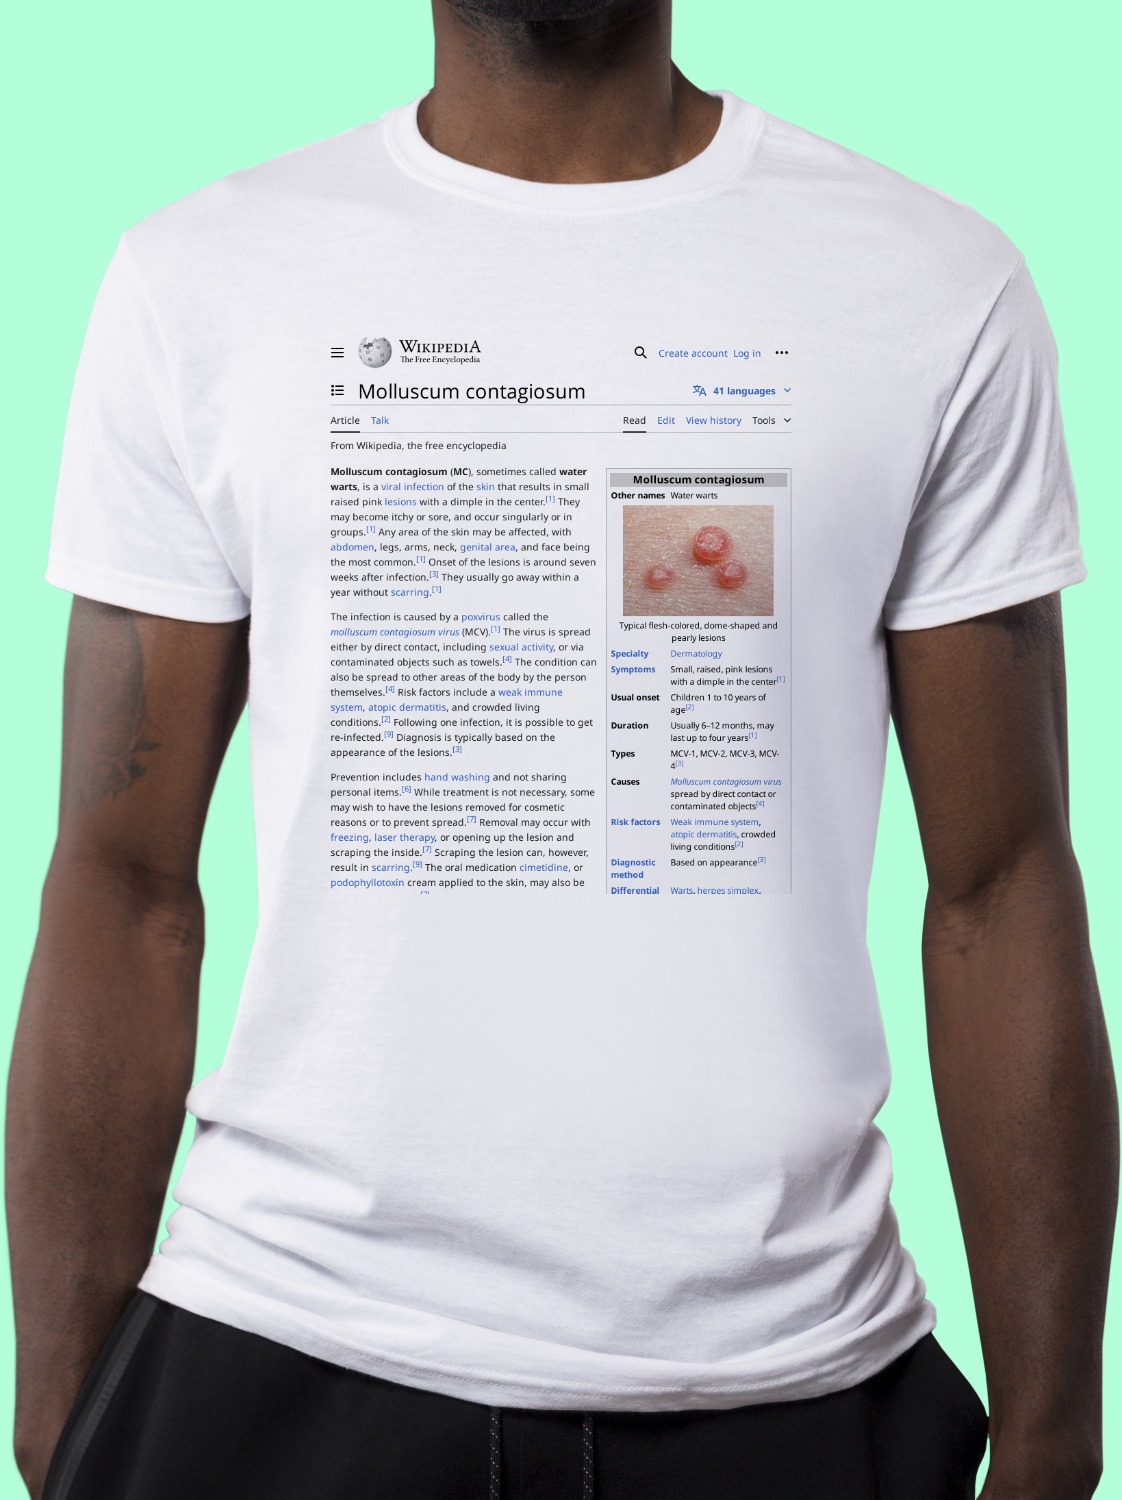 Molluscum_contagiosum Wikipedia Shirt